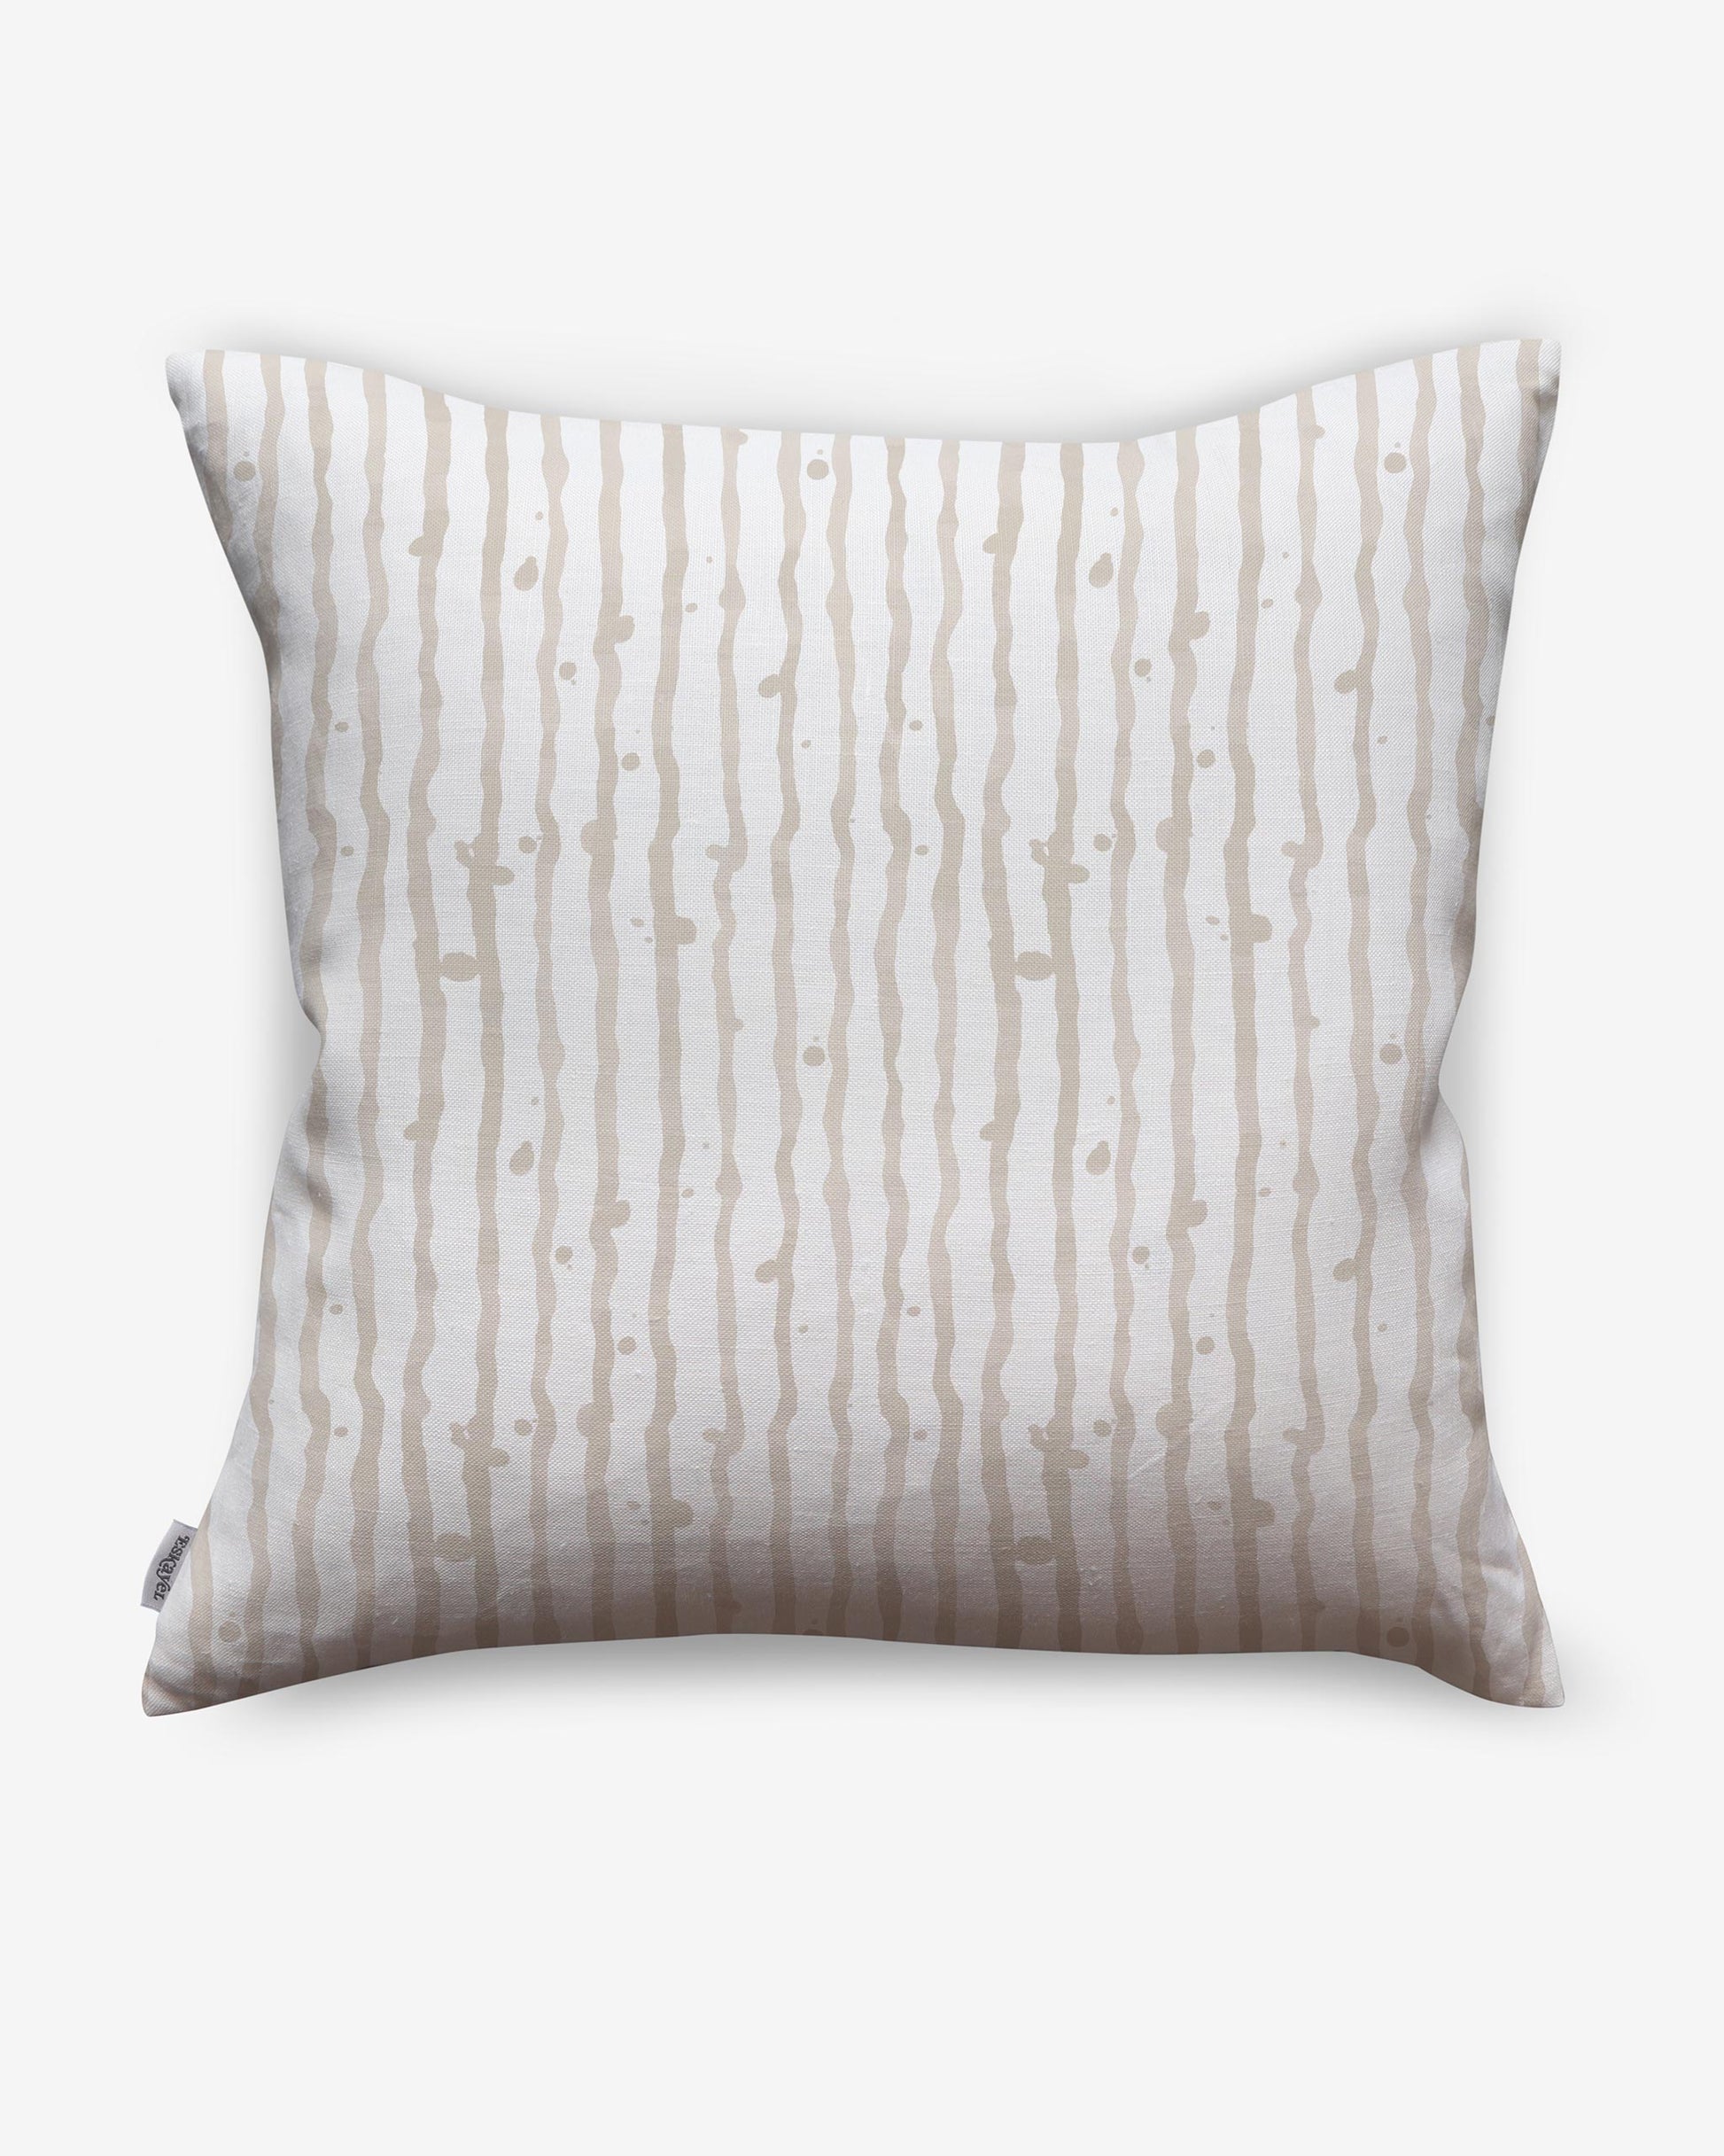 A beige and white stripe pattern Drippy Stripe Pillow Sand with Drippy Stripe design